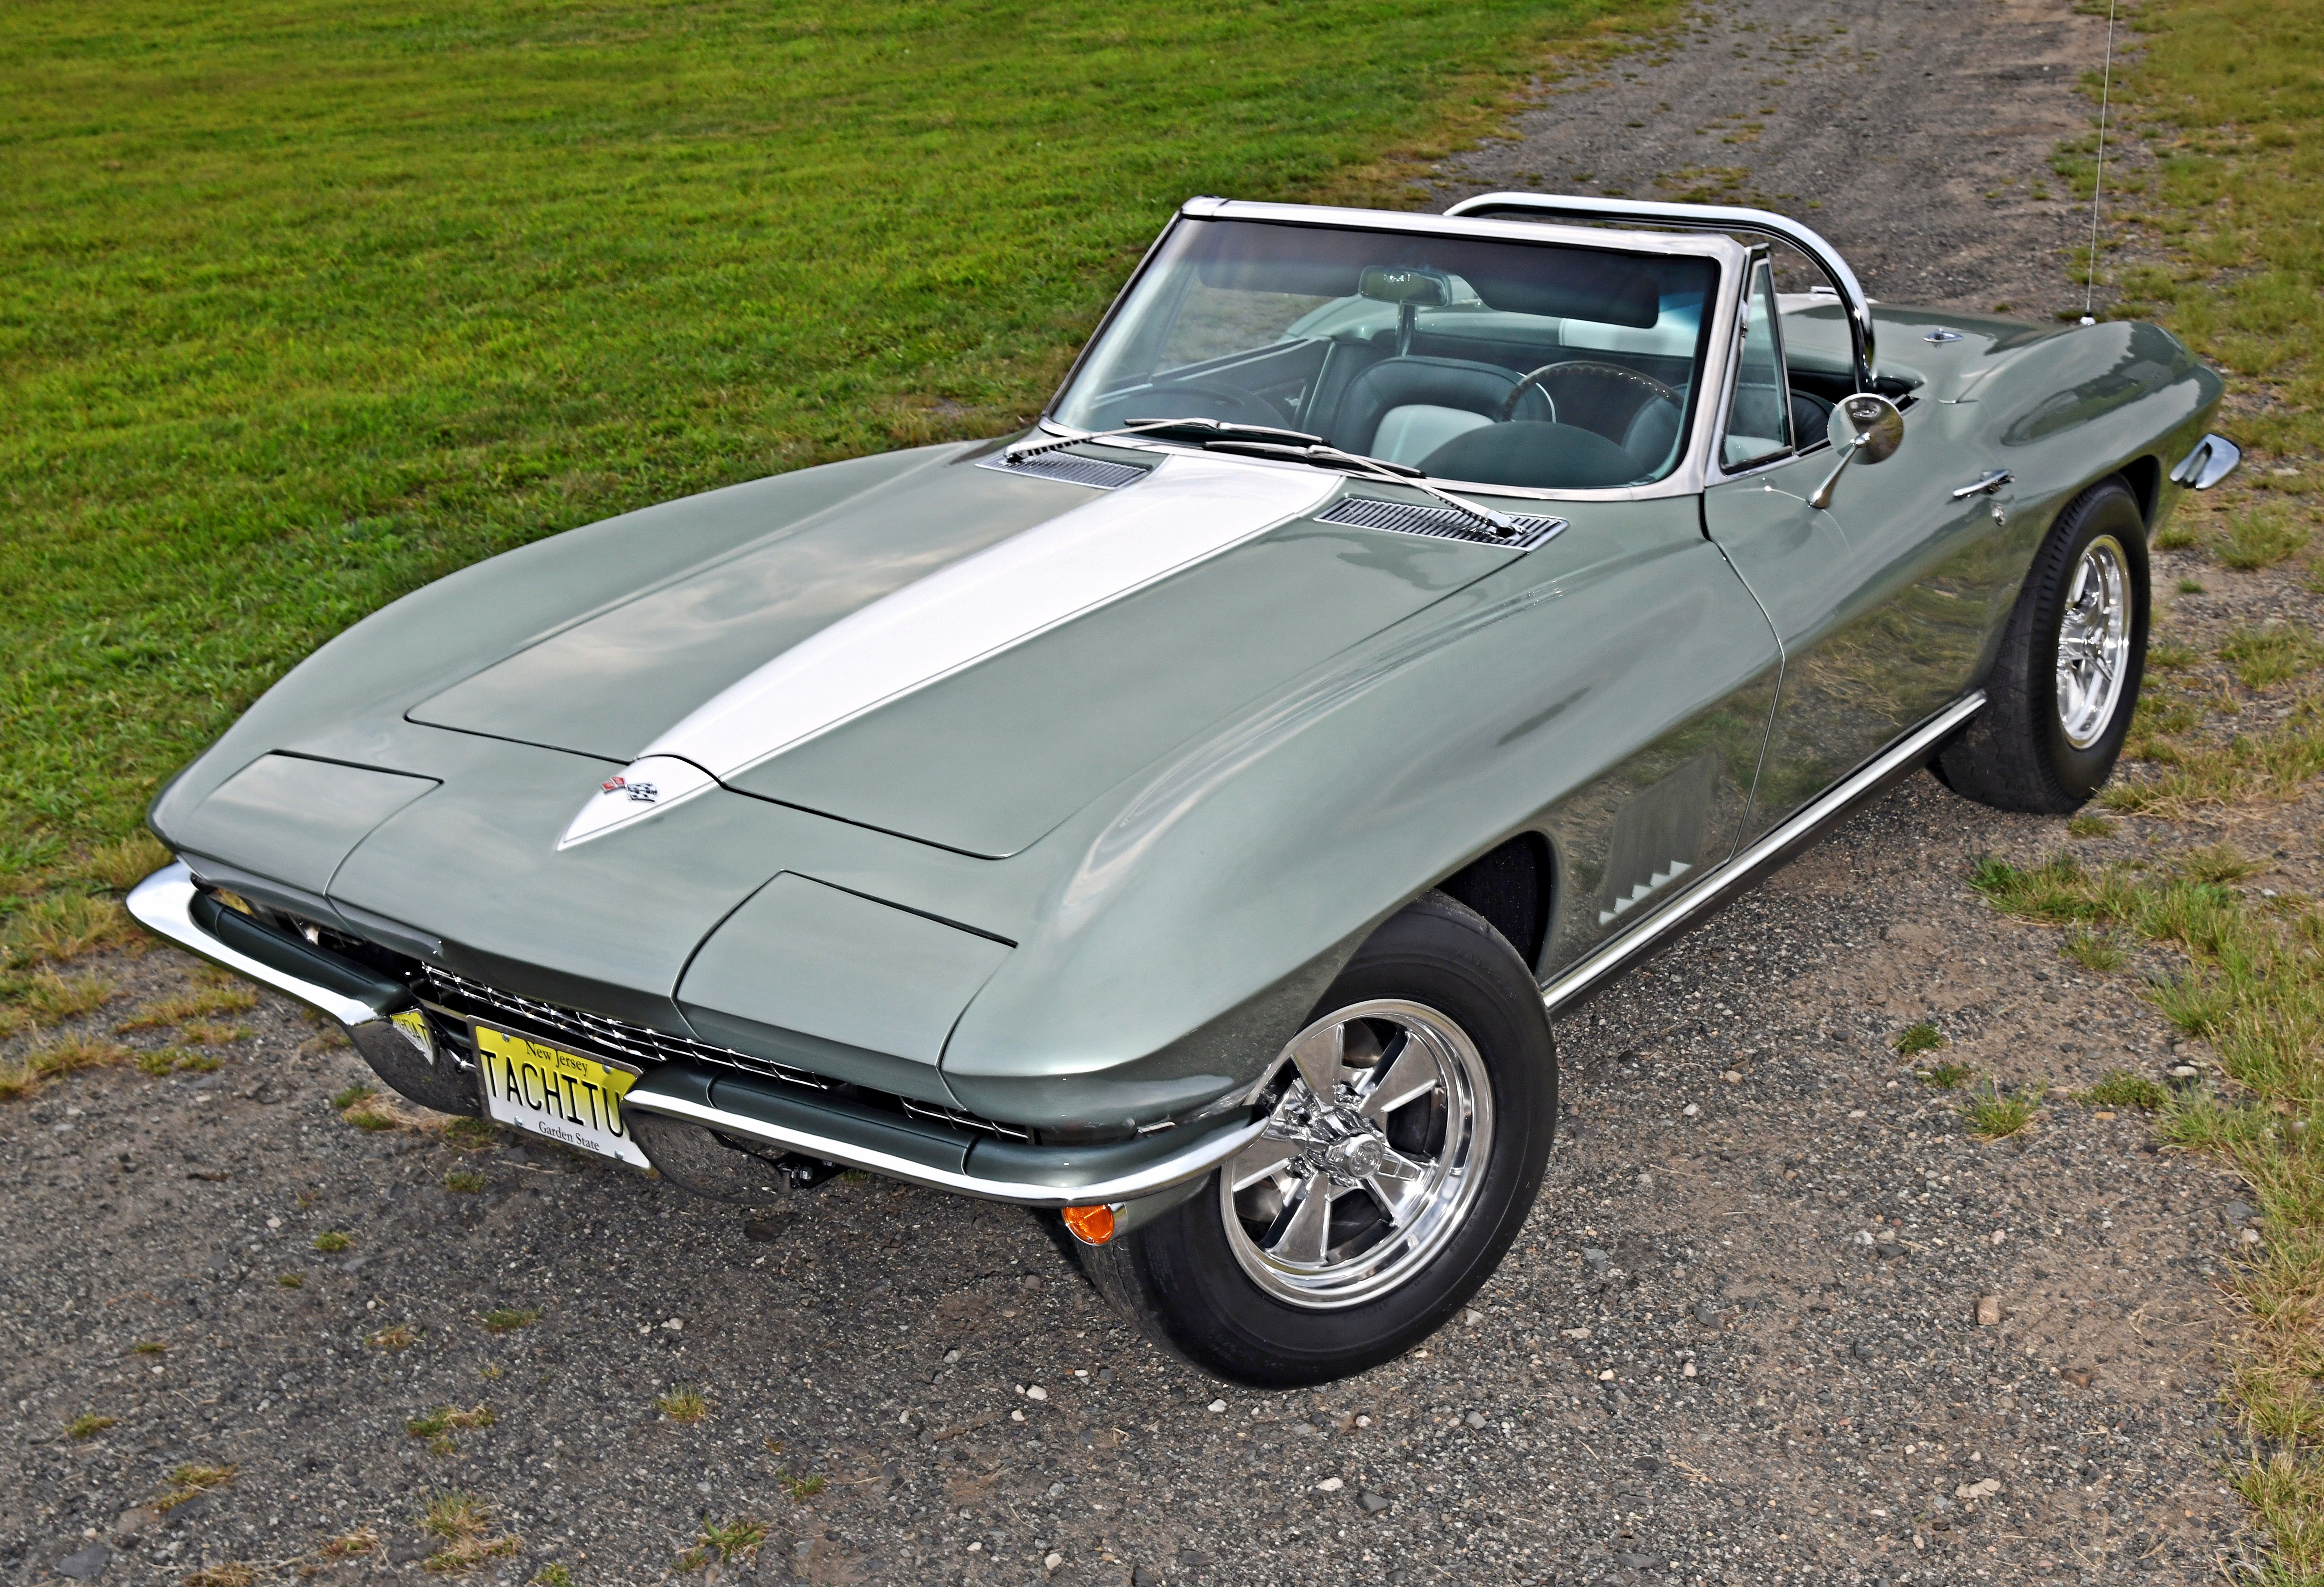 The 1967 Corvette Anniversary Gift